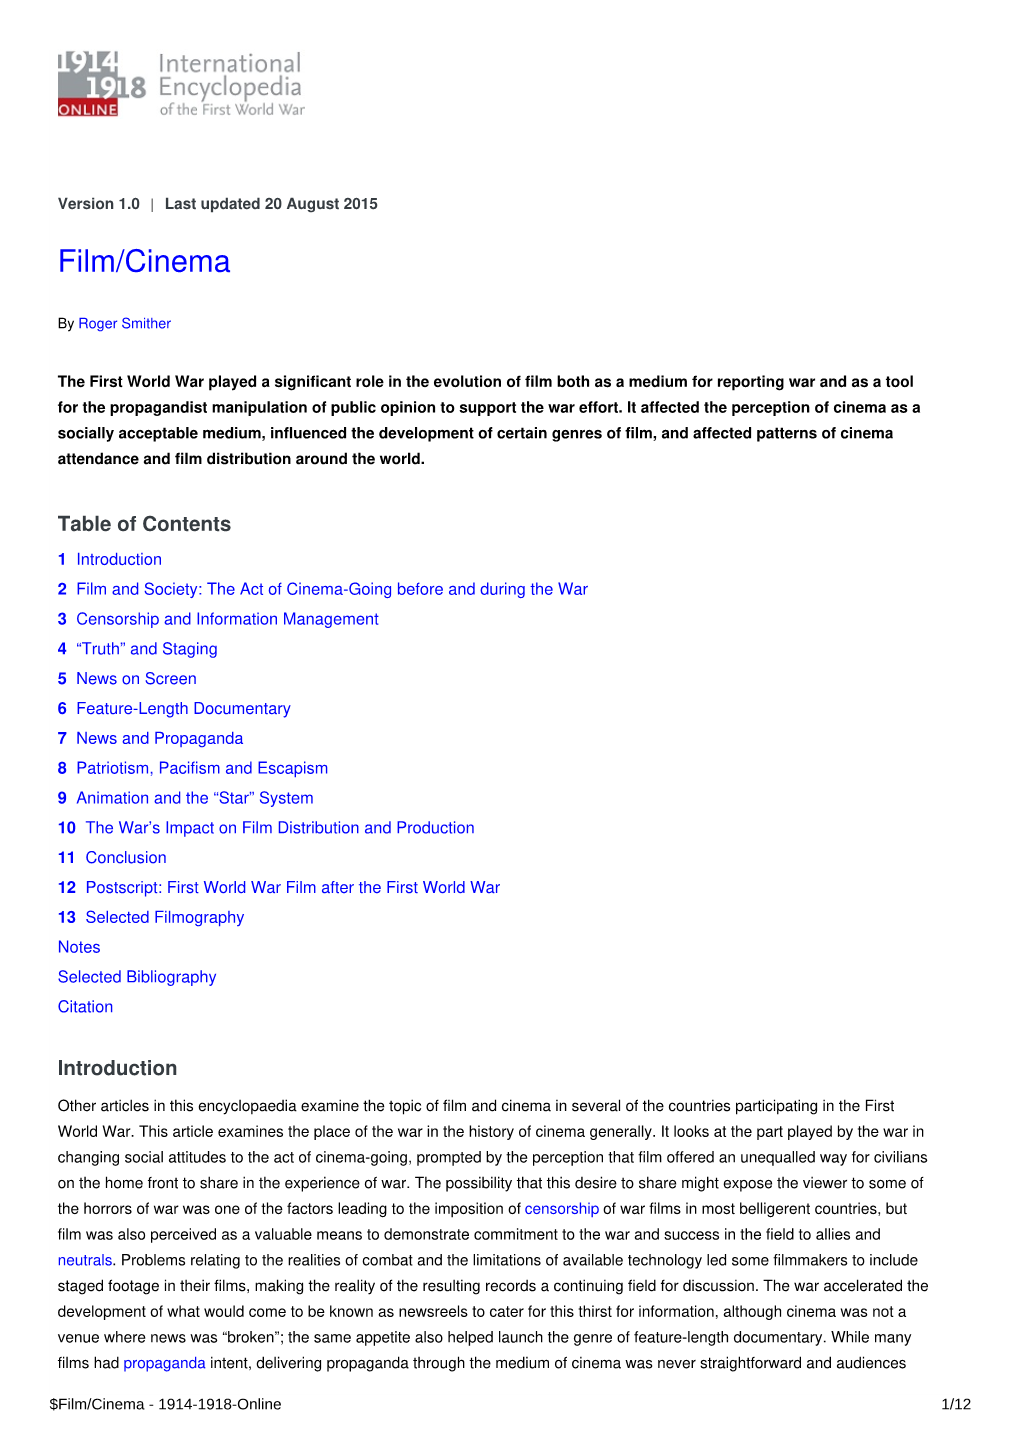 Film/Cinema | International Encyclopedia of the First World War